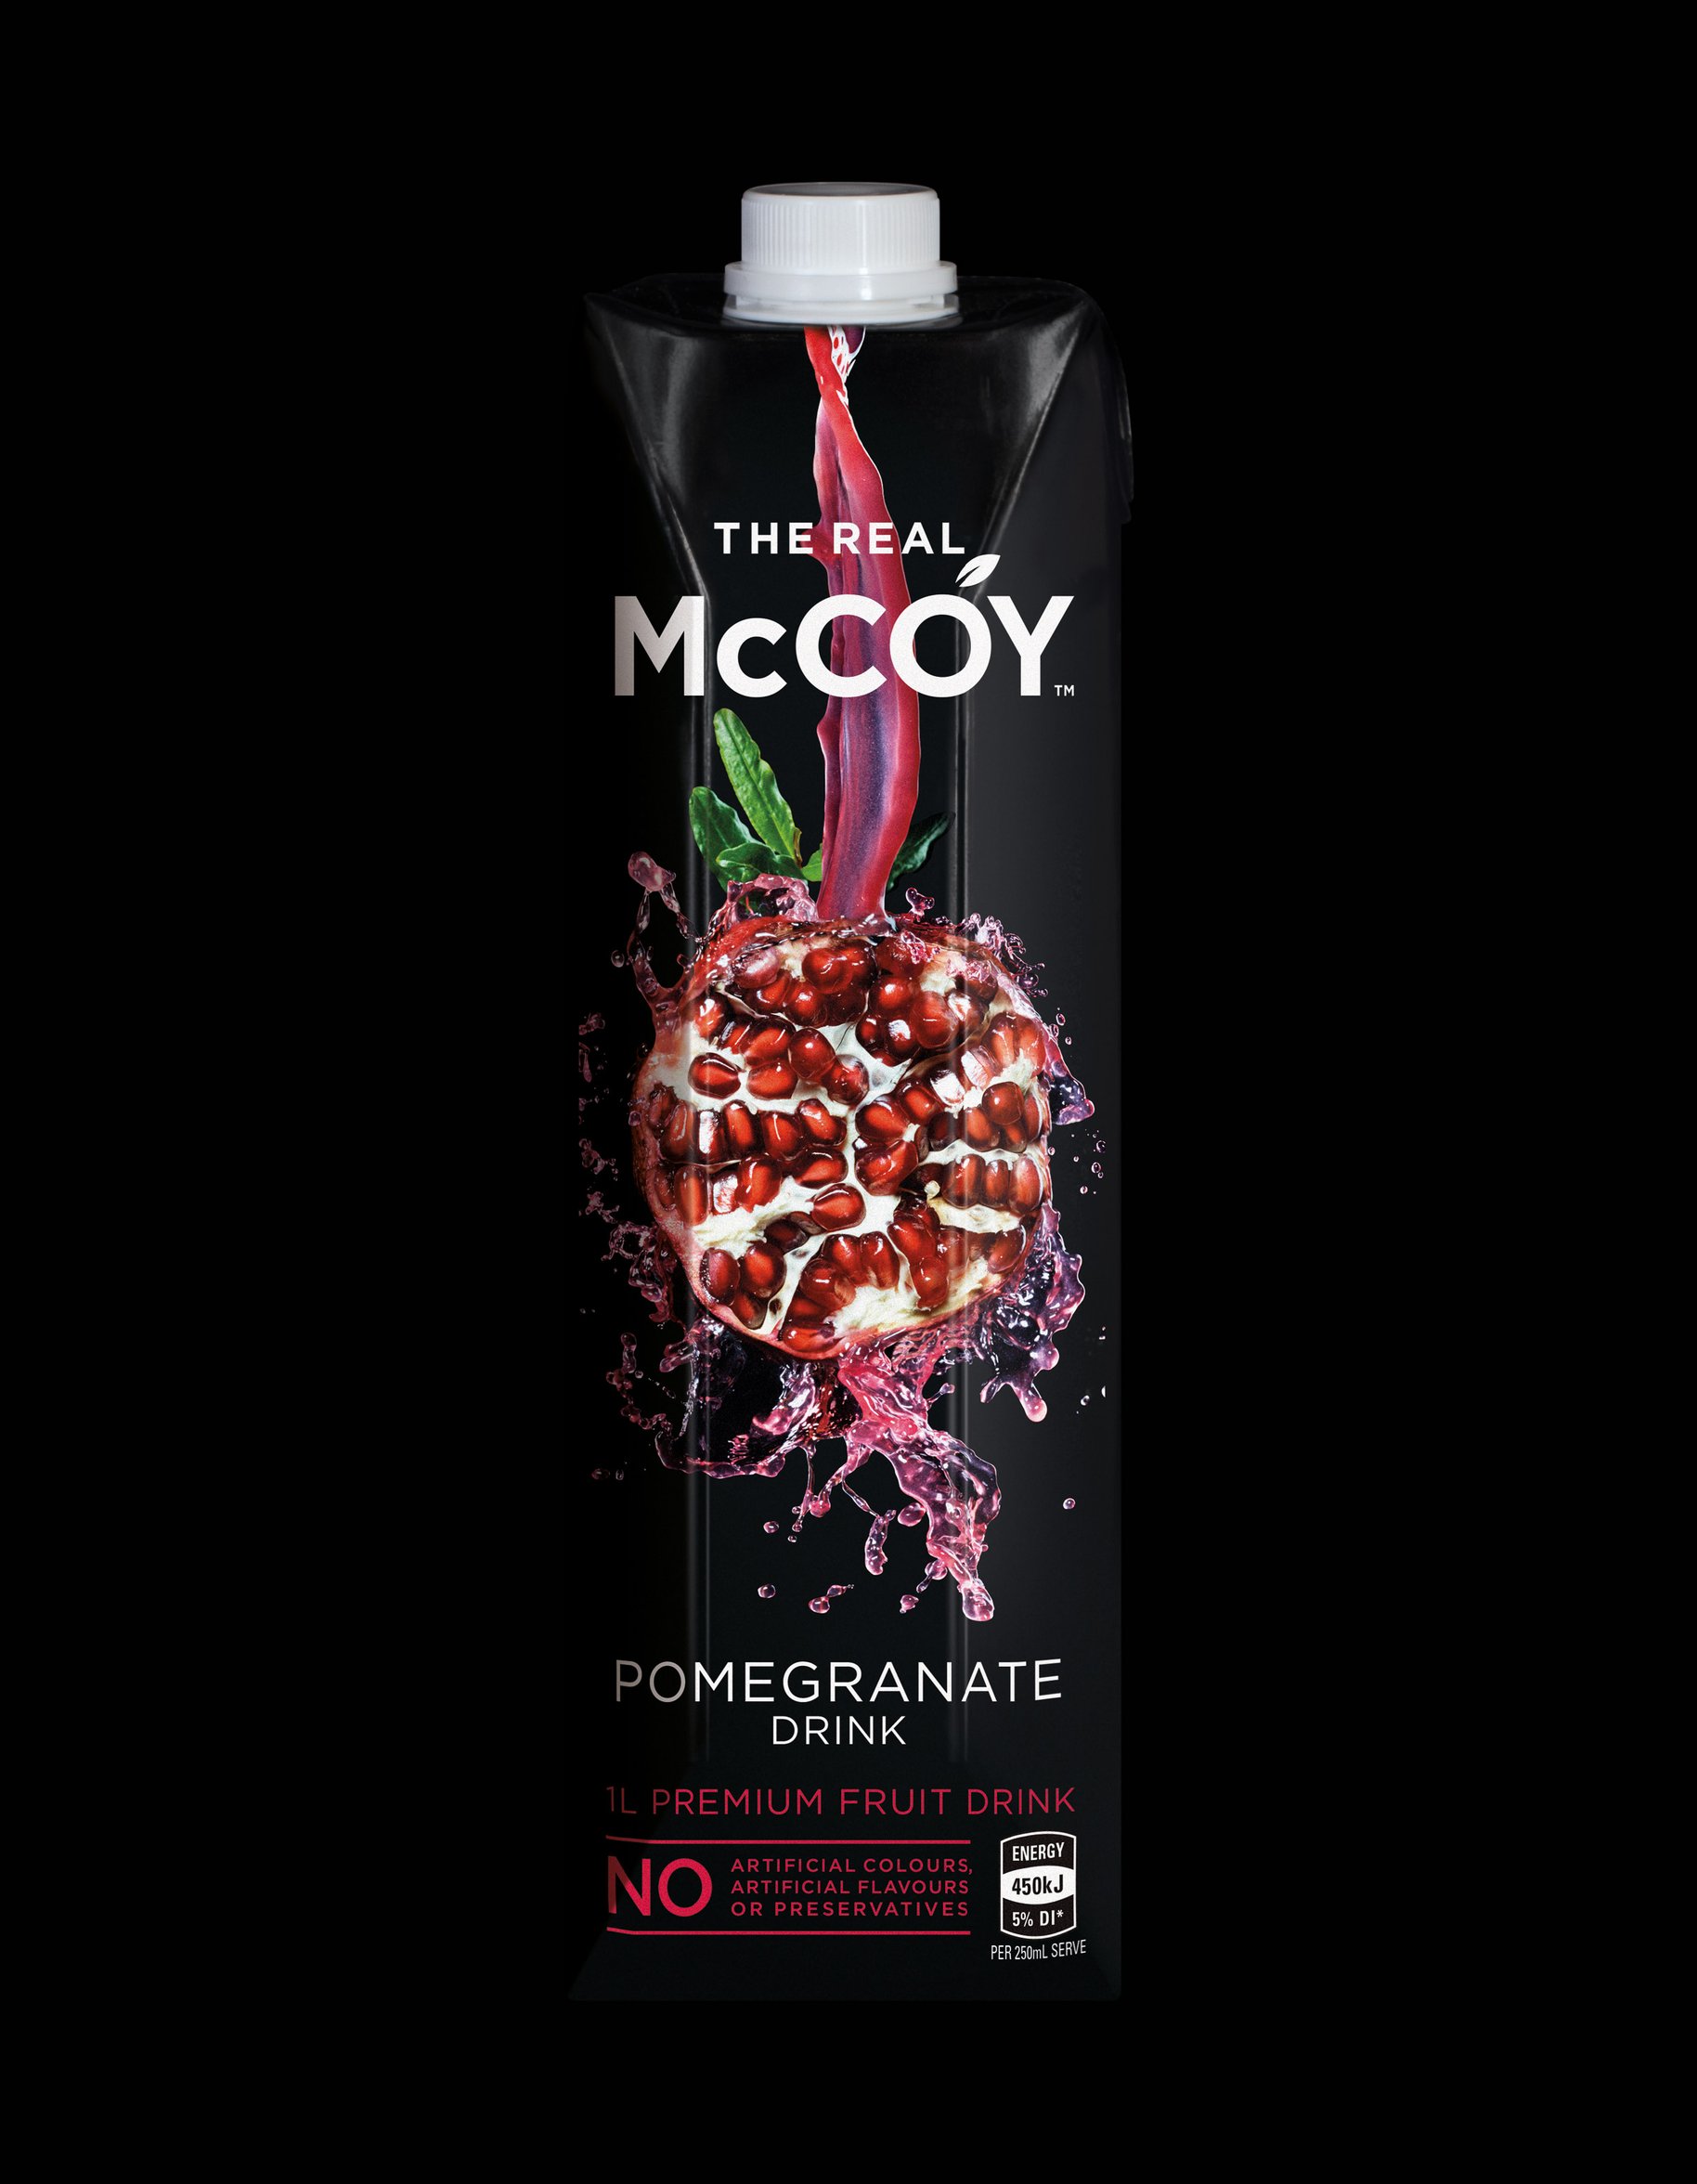 McCoy 1L tetra pomegranate juice packaging